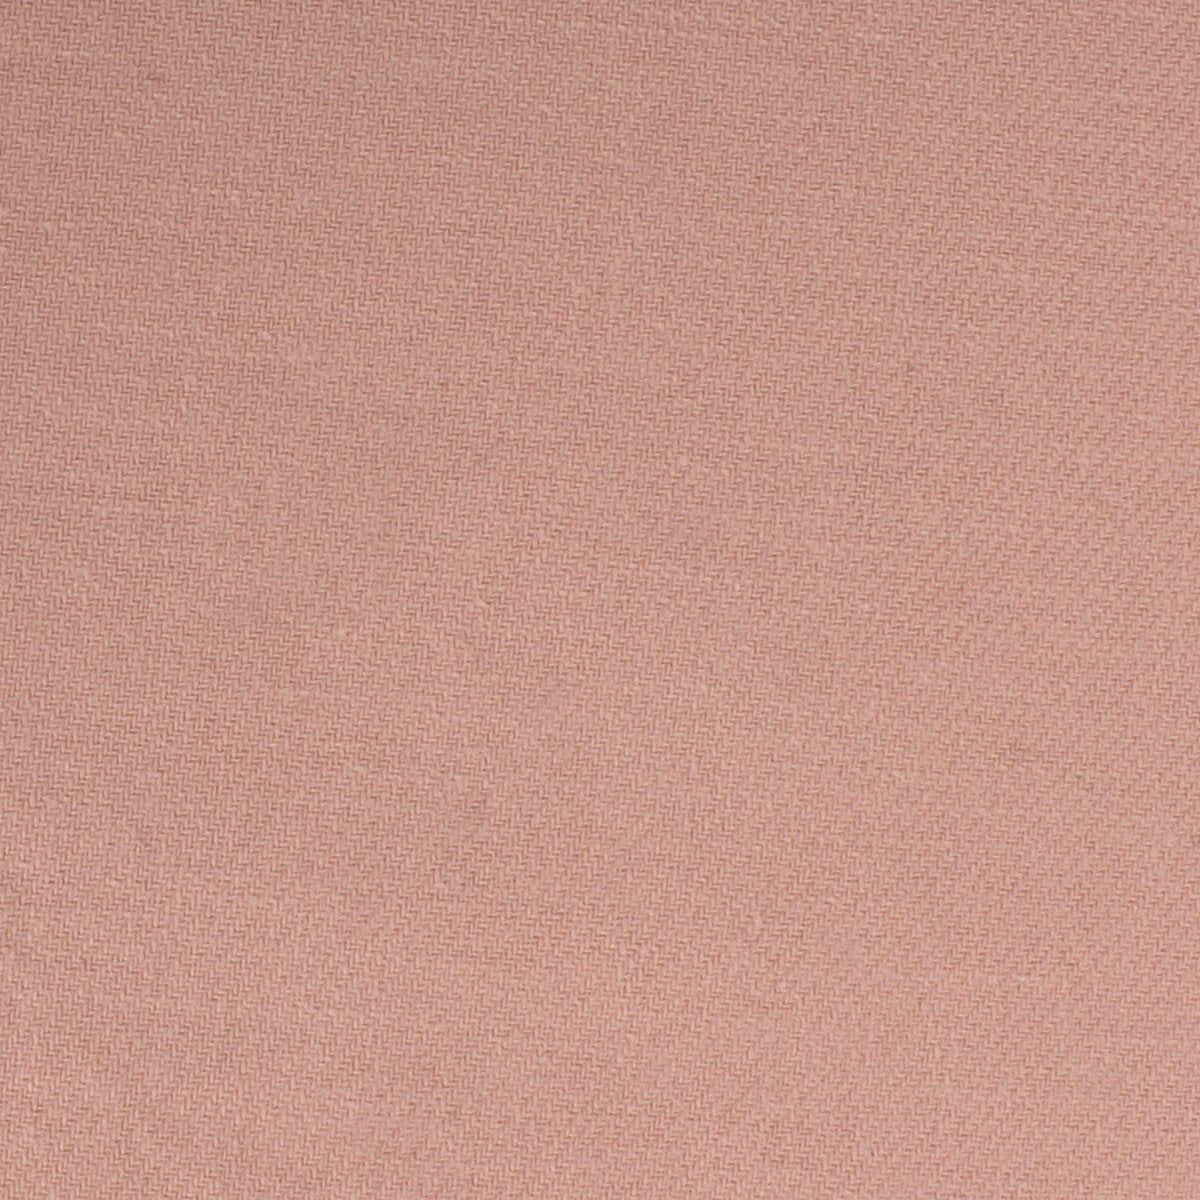 Dusty Rose Pink Skinny Tie Fabric